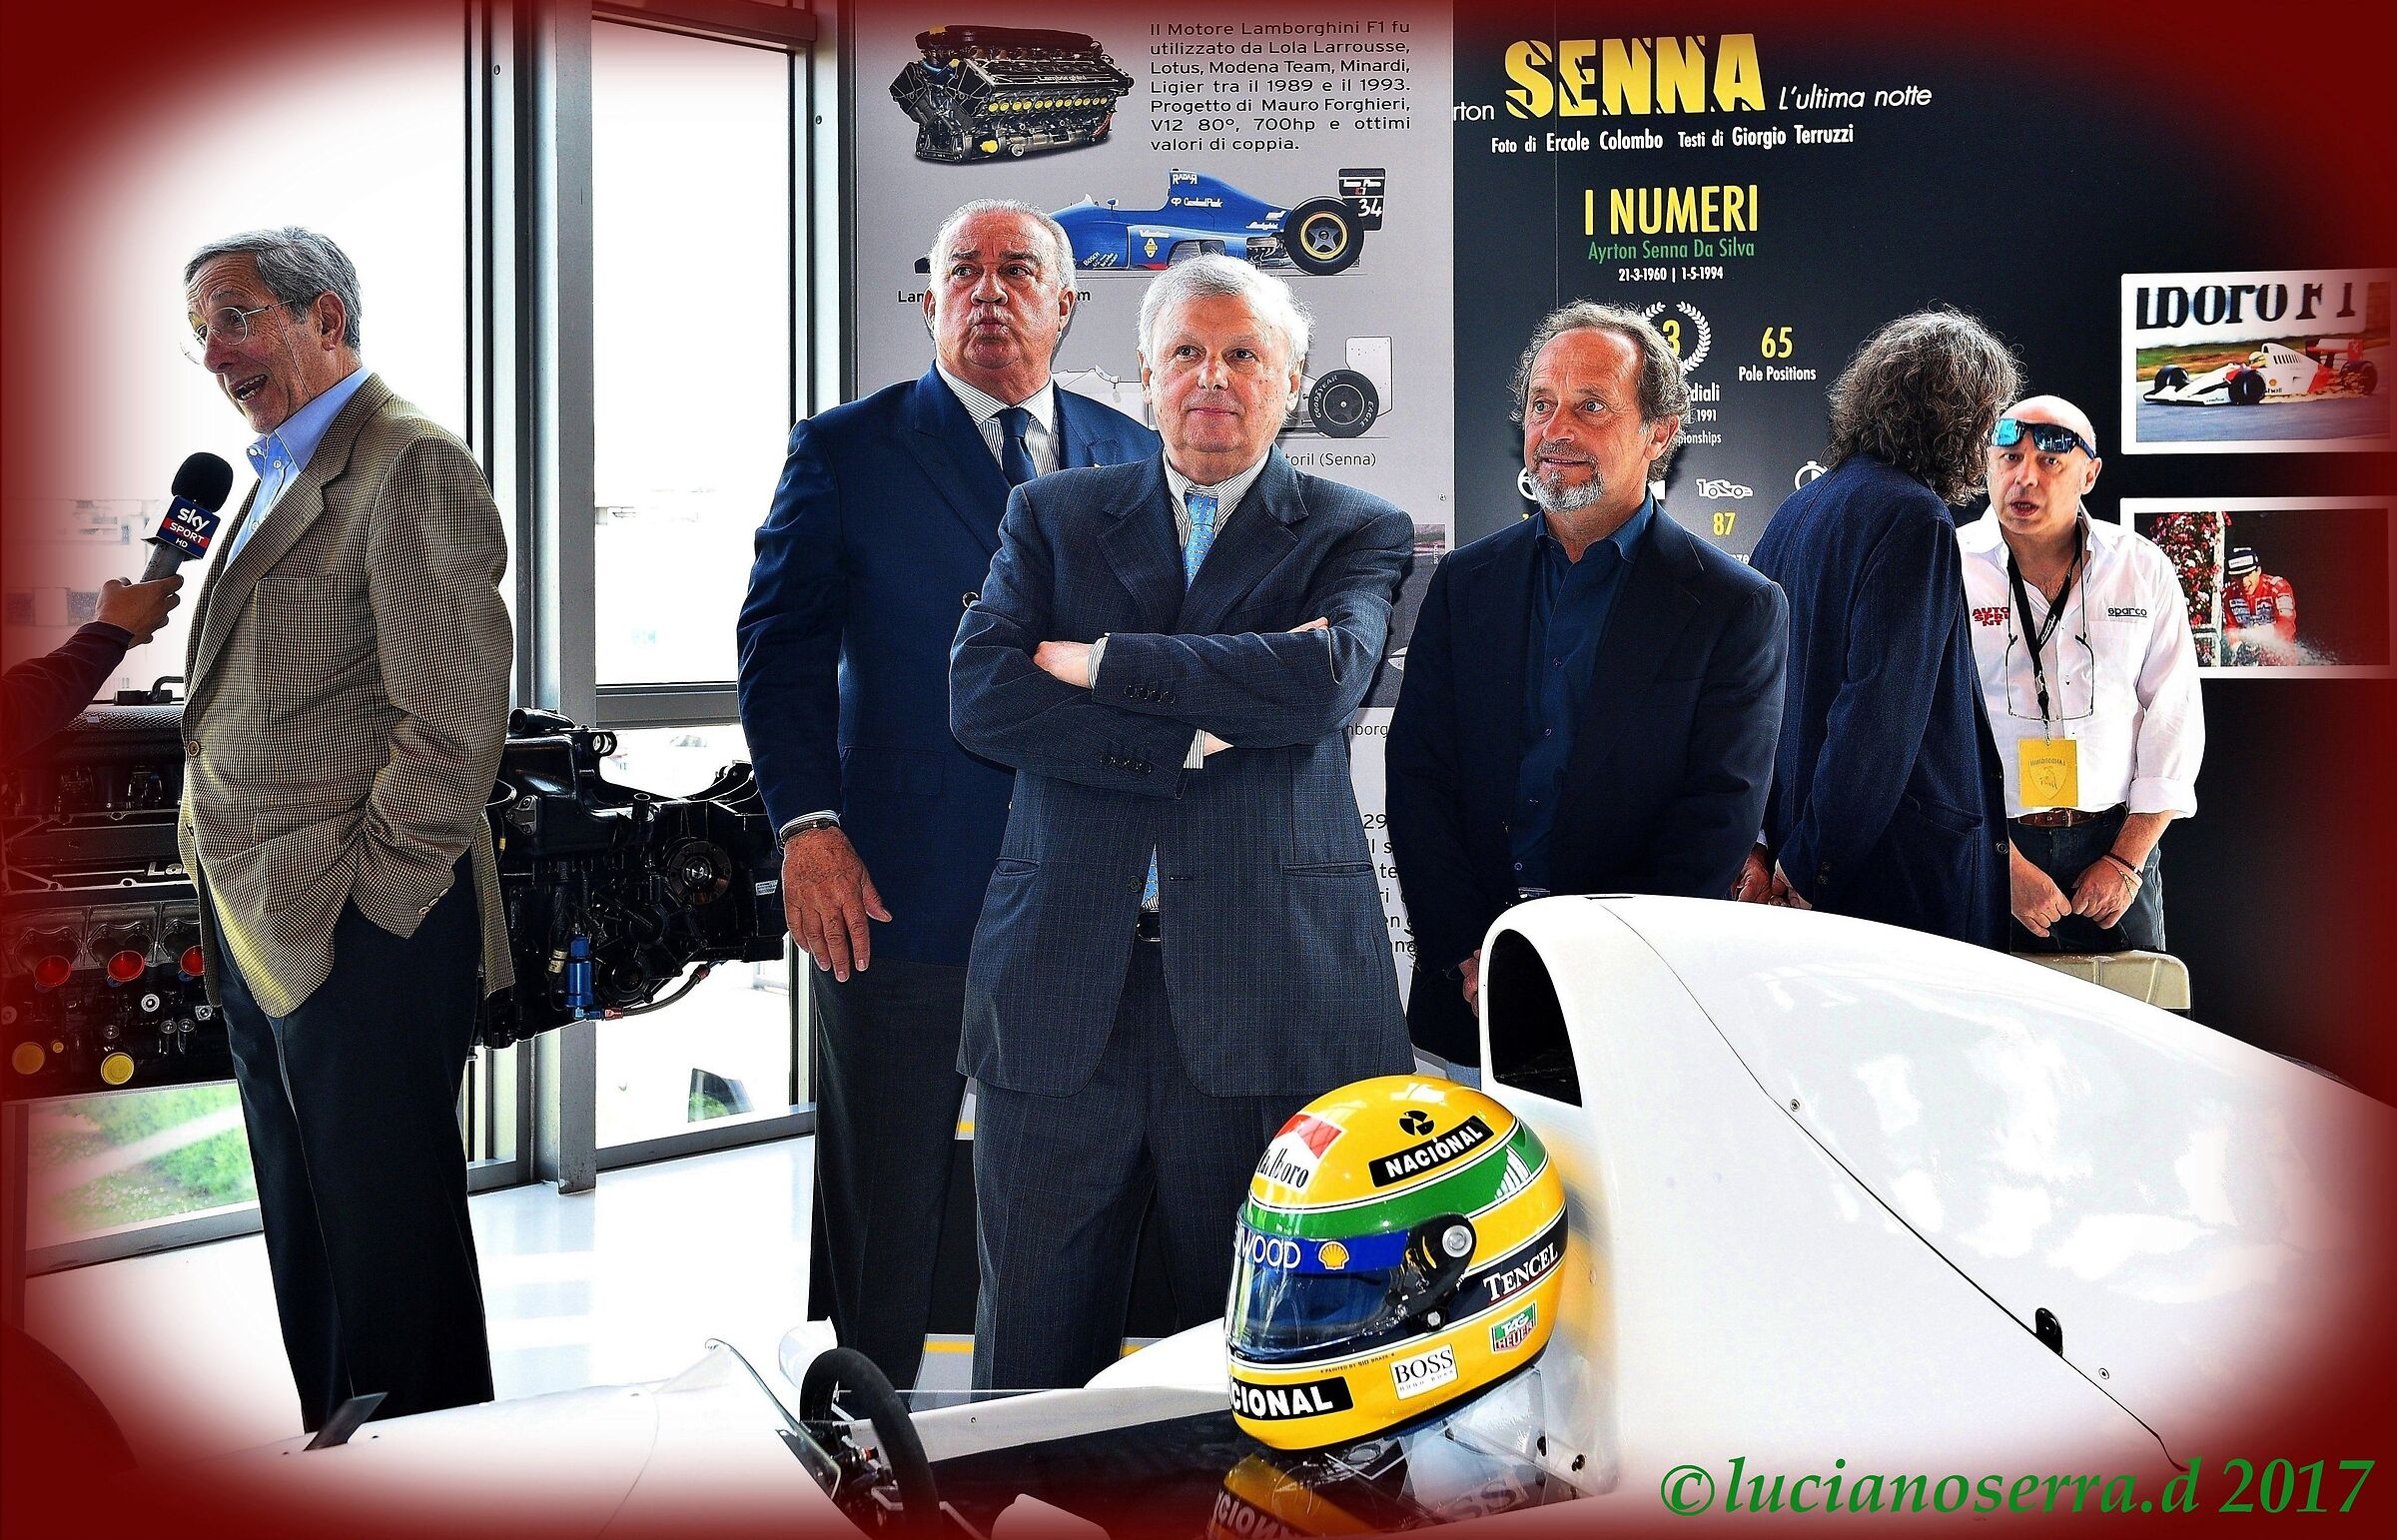 At the inauguration of... Ayrton Senna: The last night...